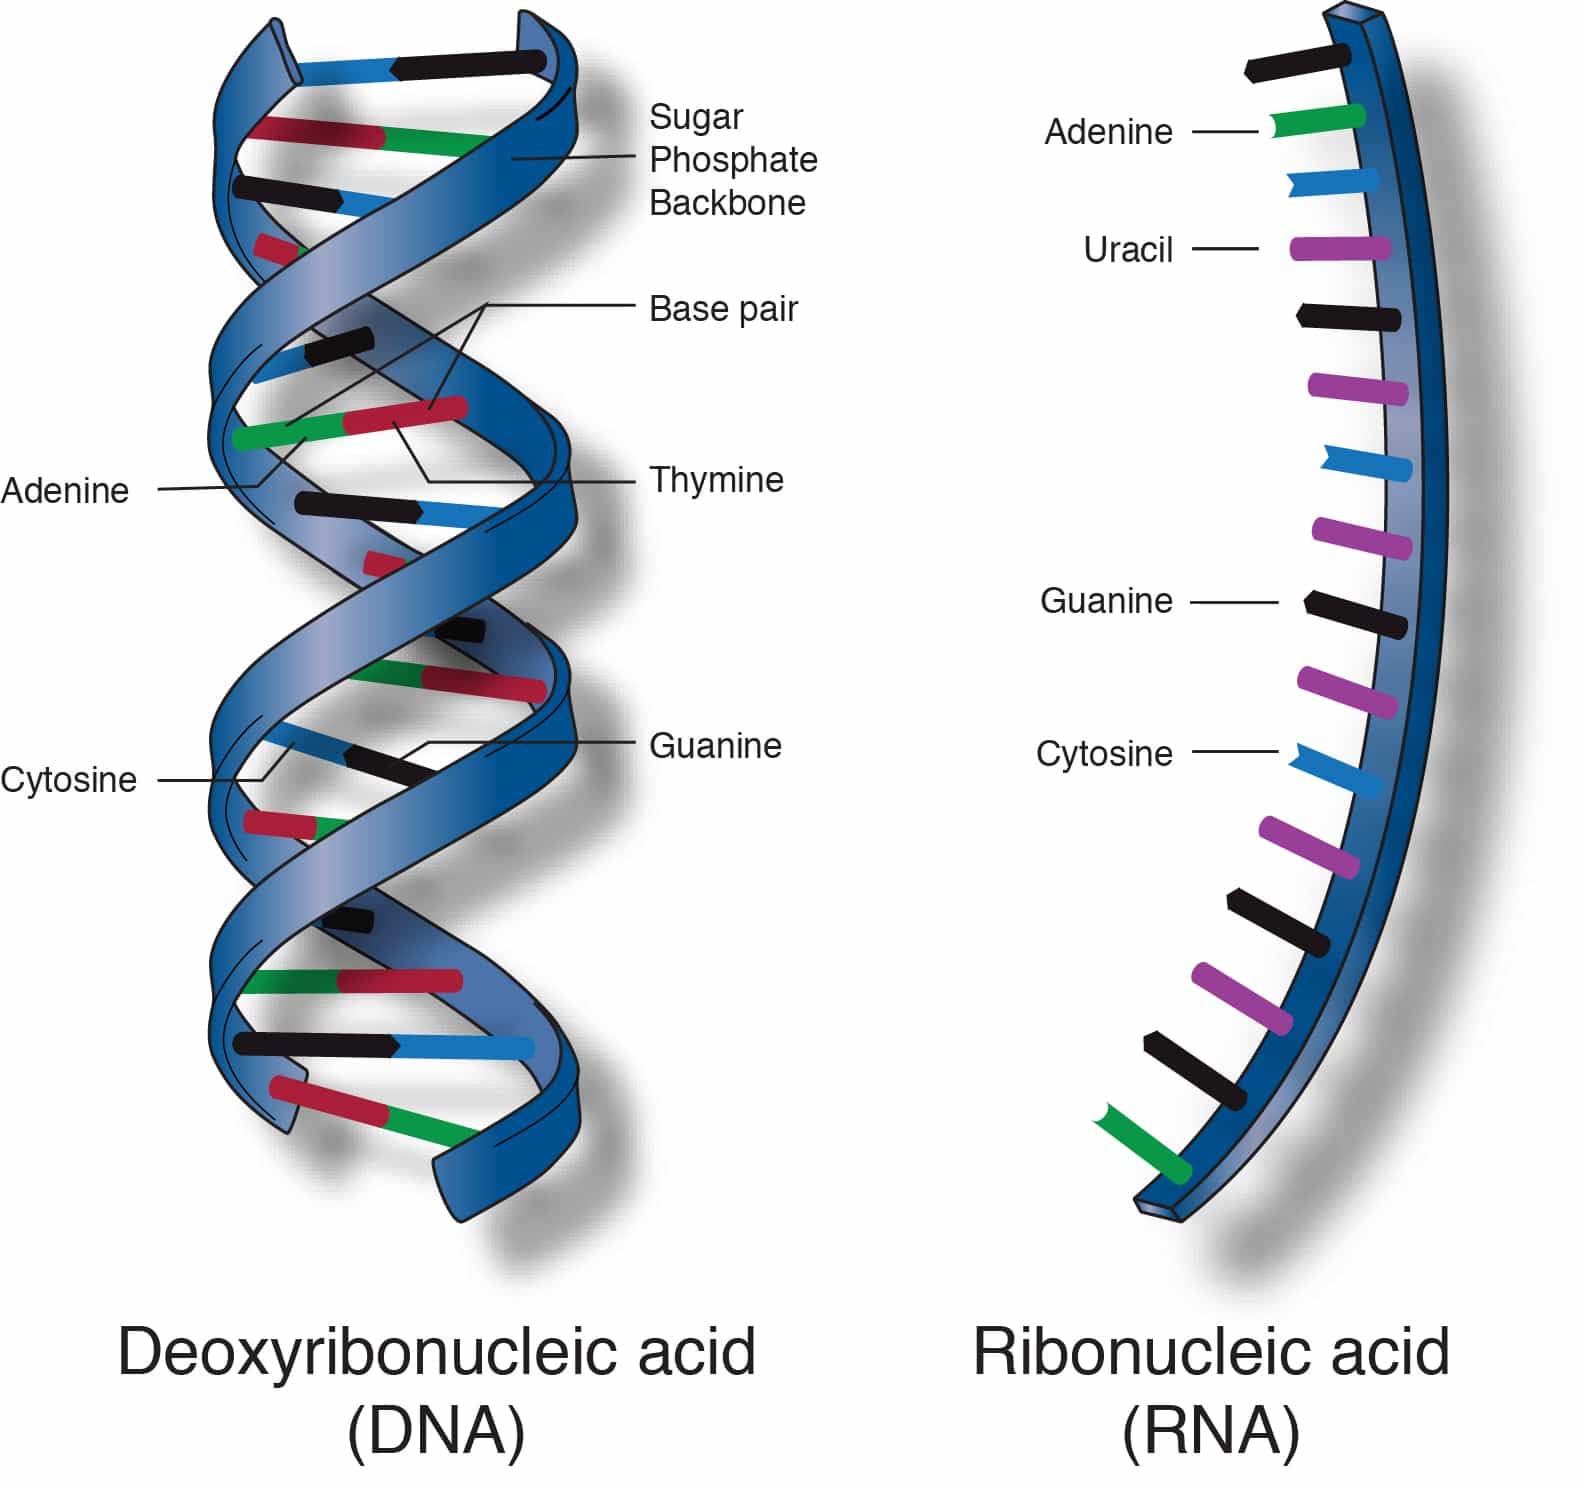 nucleic acids dna & rna